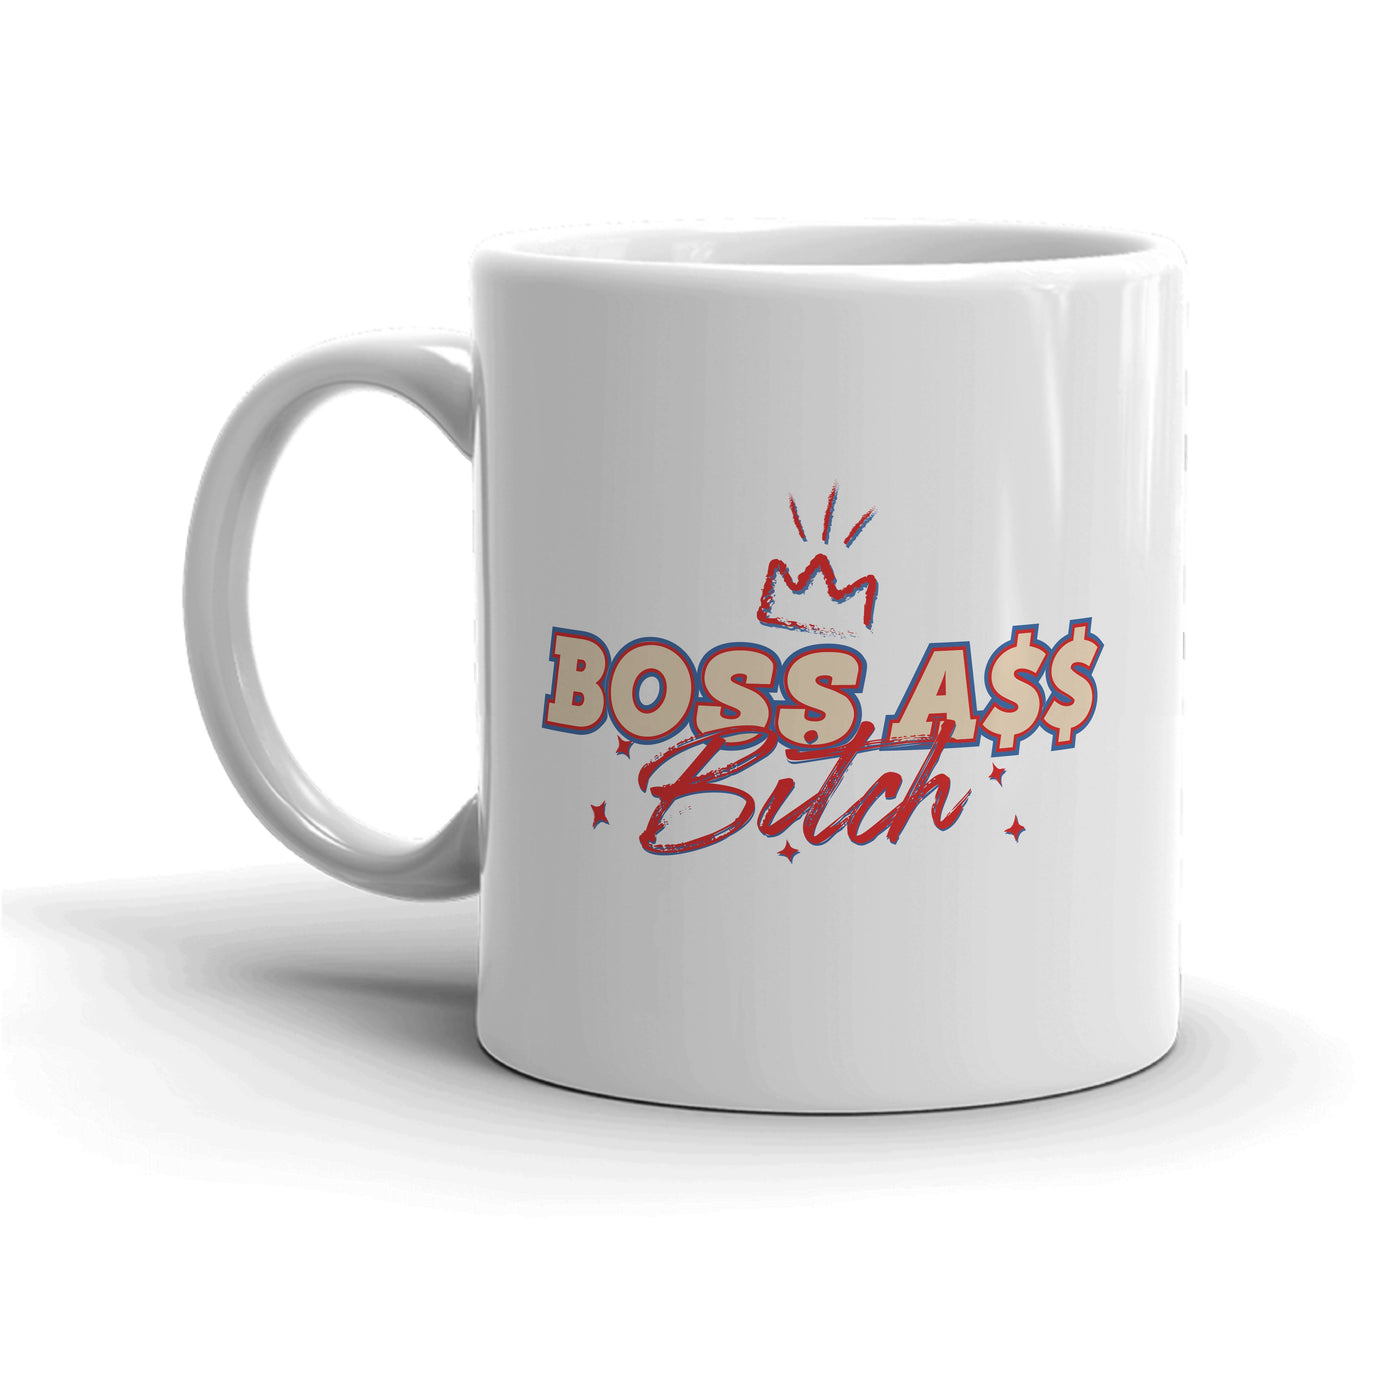 Ted Lasso Boss A$$ White Mug